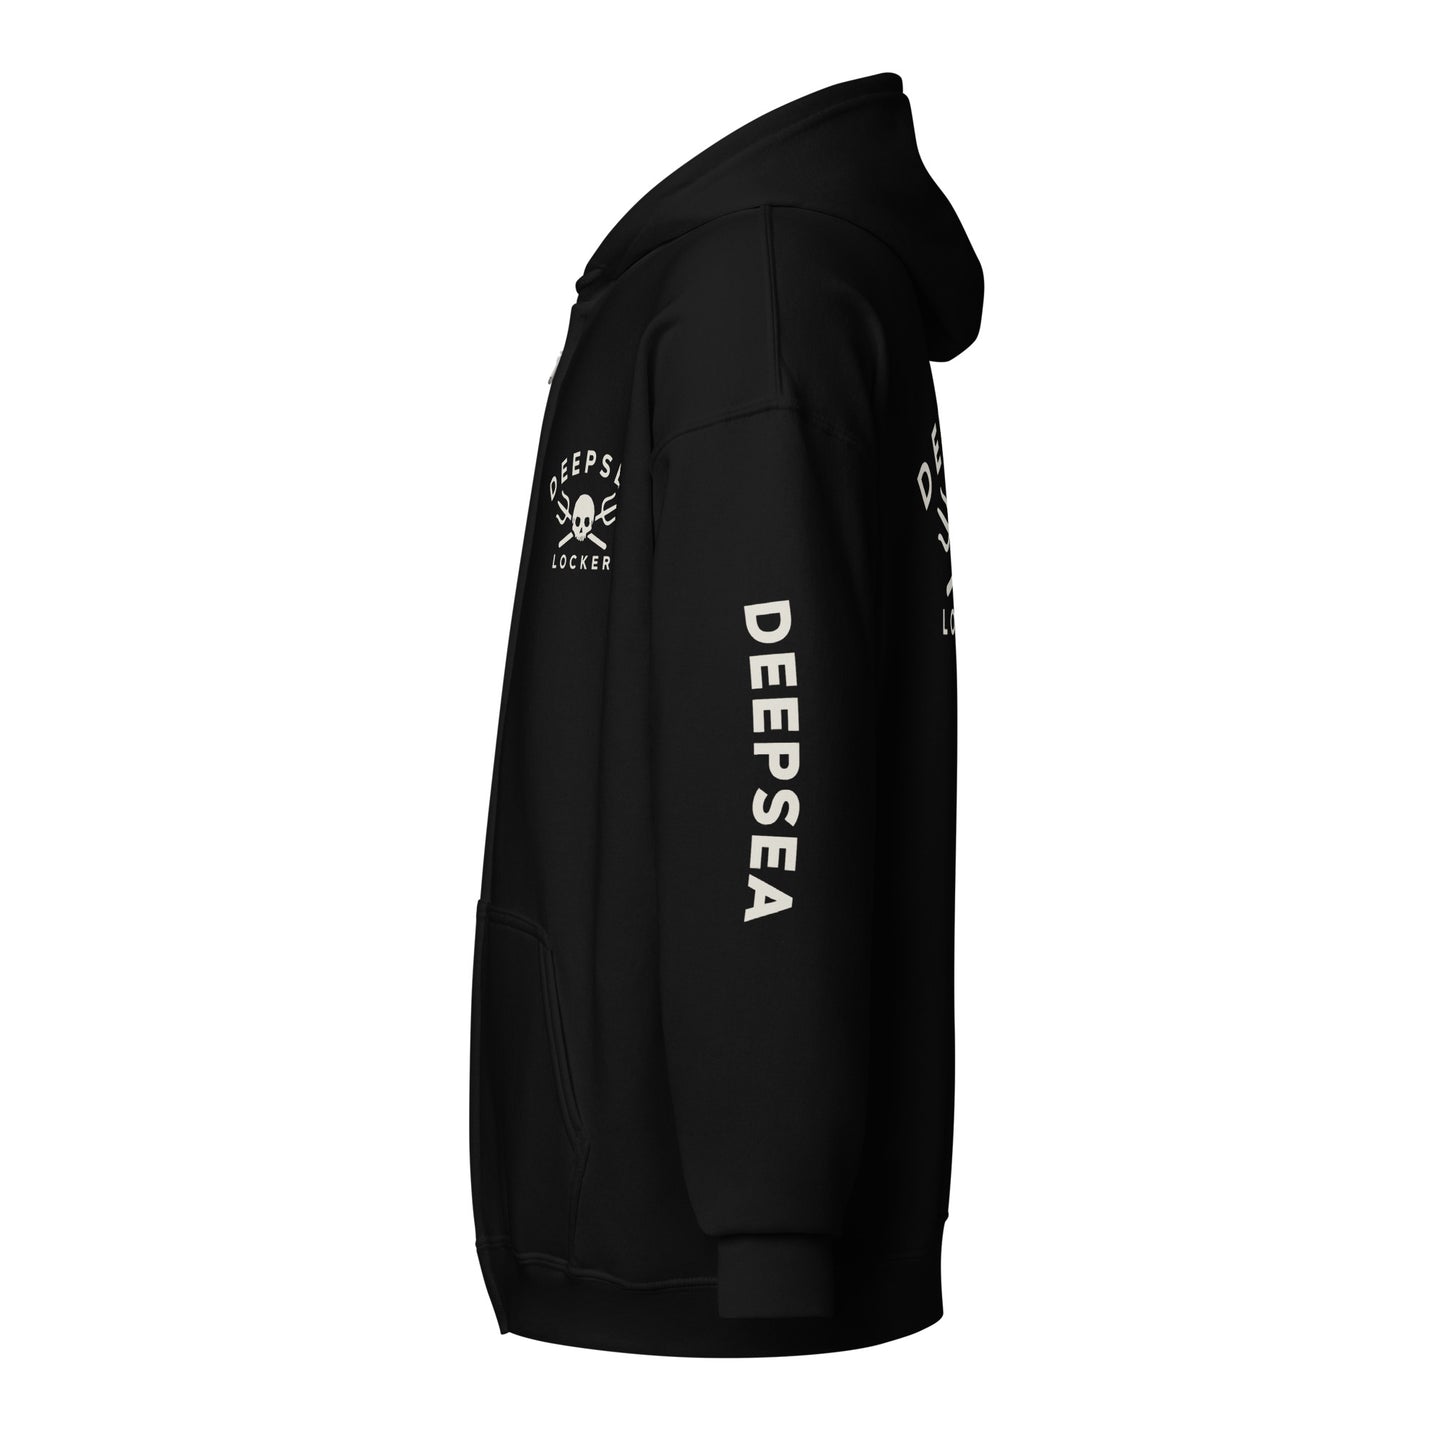 DEEPSEA Skull Trident Unisex heavy blend zip hoodie